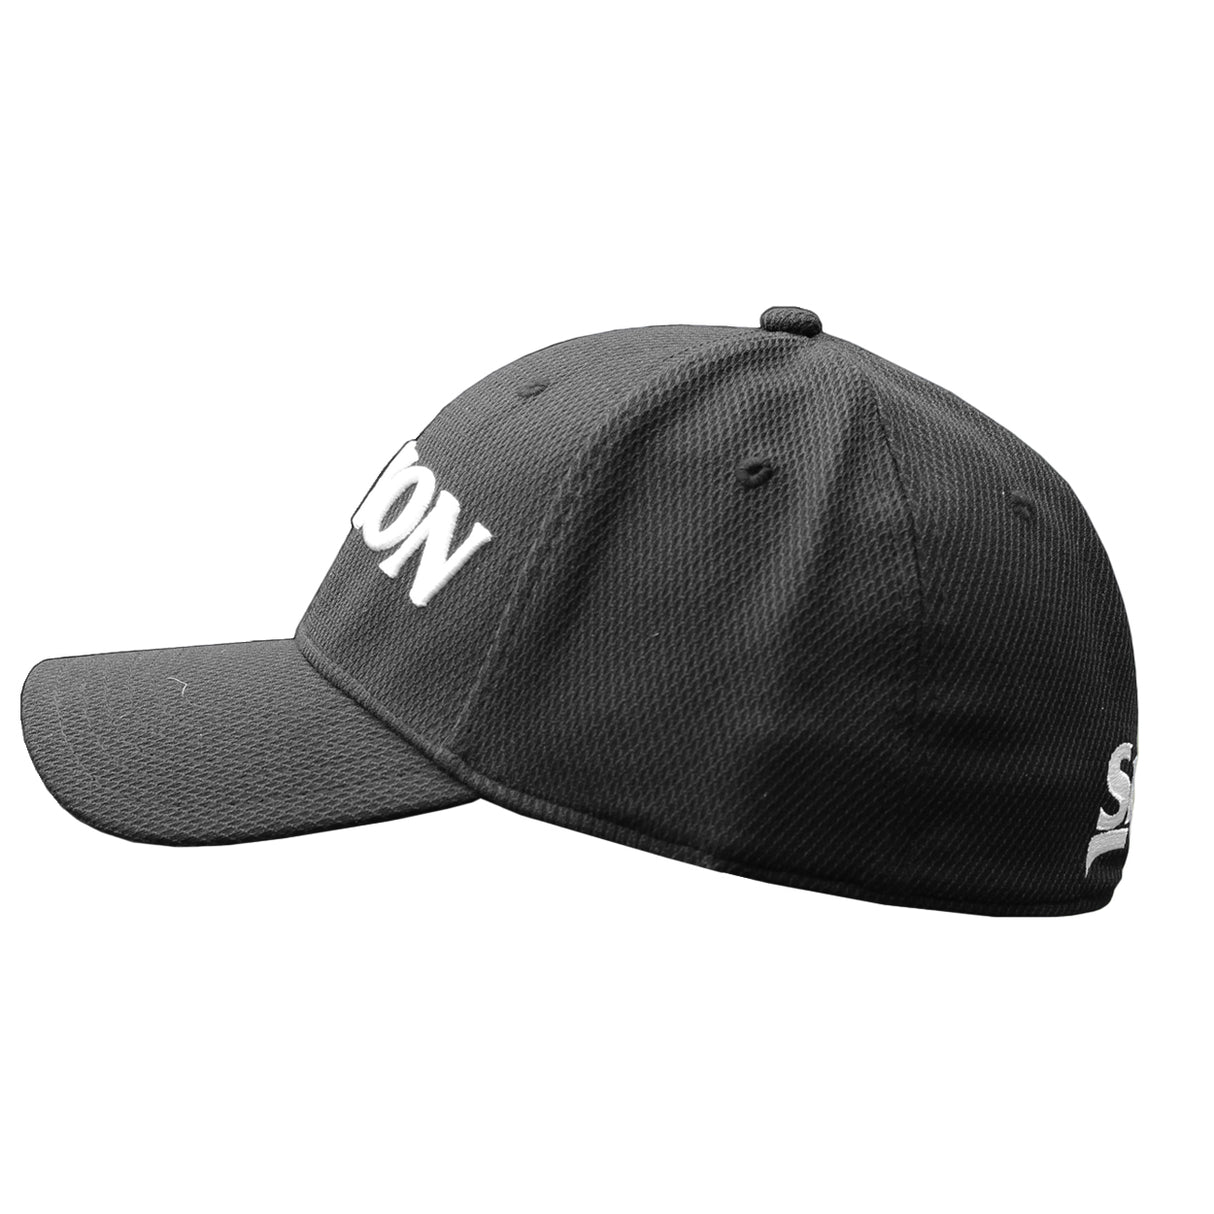 Srixon Golf Men's FlexiFit Fitted Hat